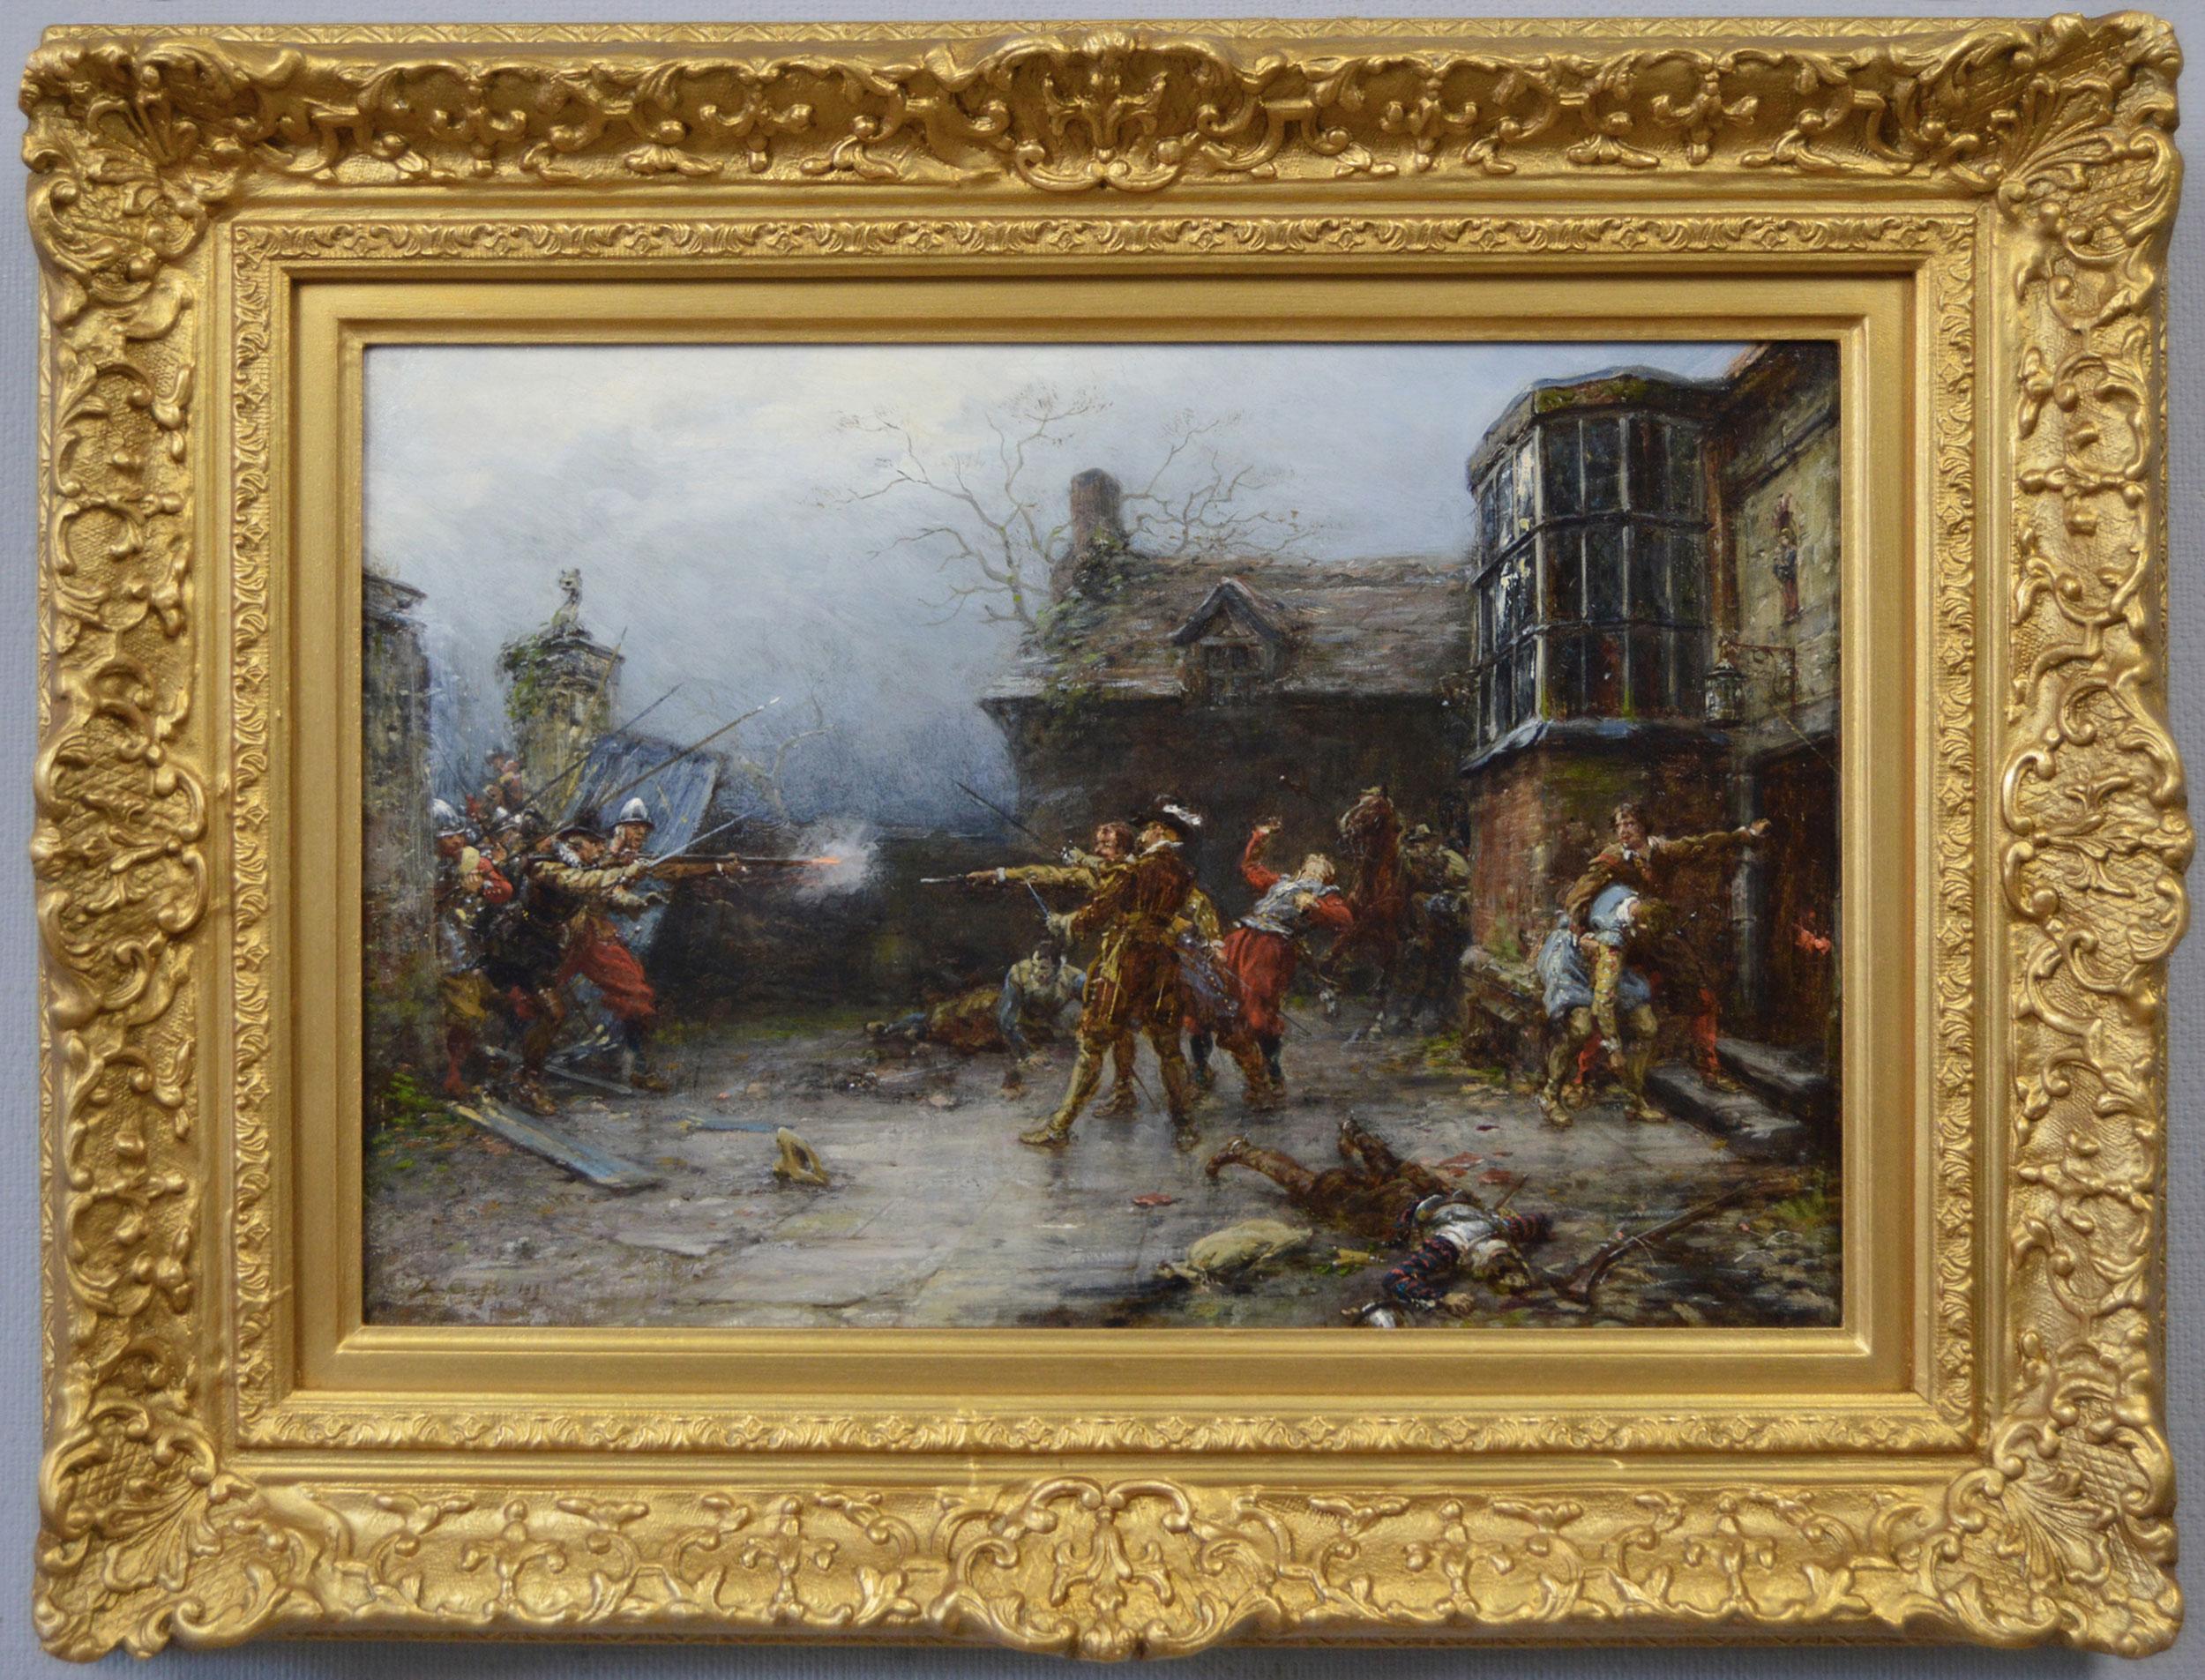 Ernest Crofts Landscape Painting - 19th Century historical genre oil painting of the gunpowder plot conspirators